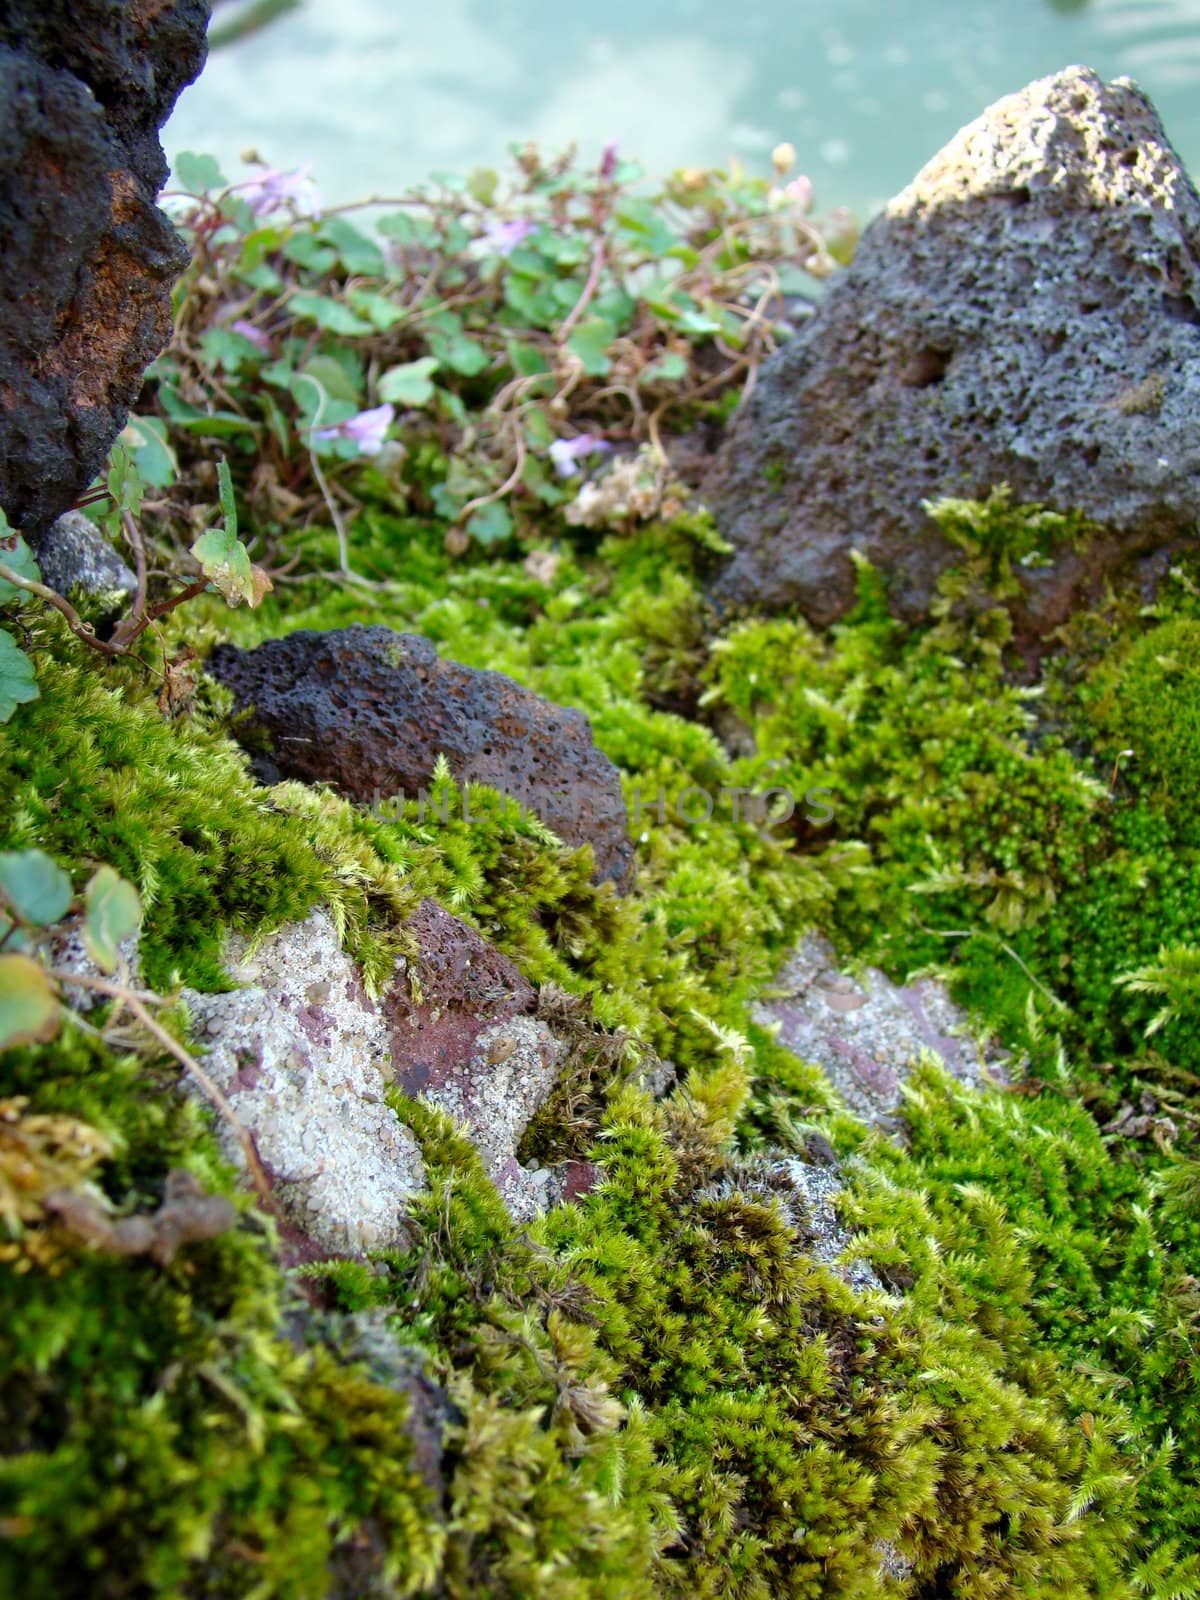 rocks with moss